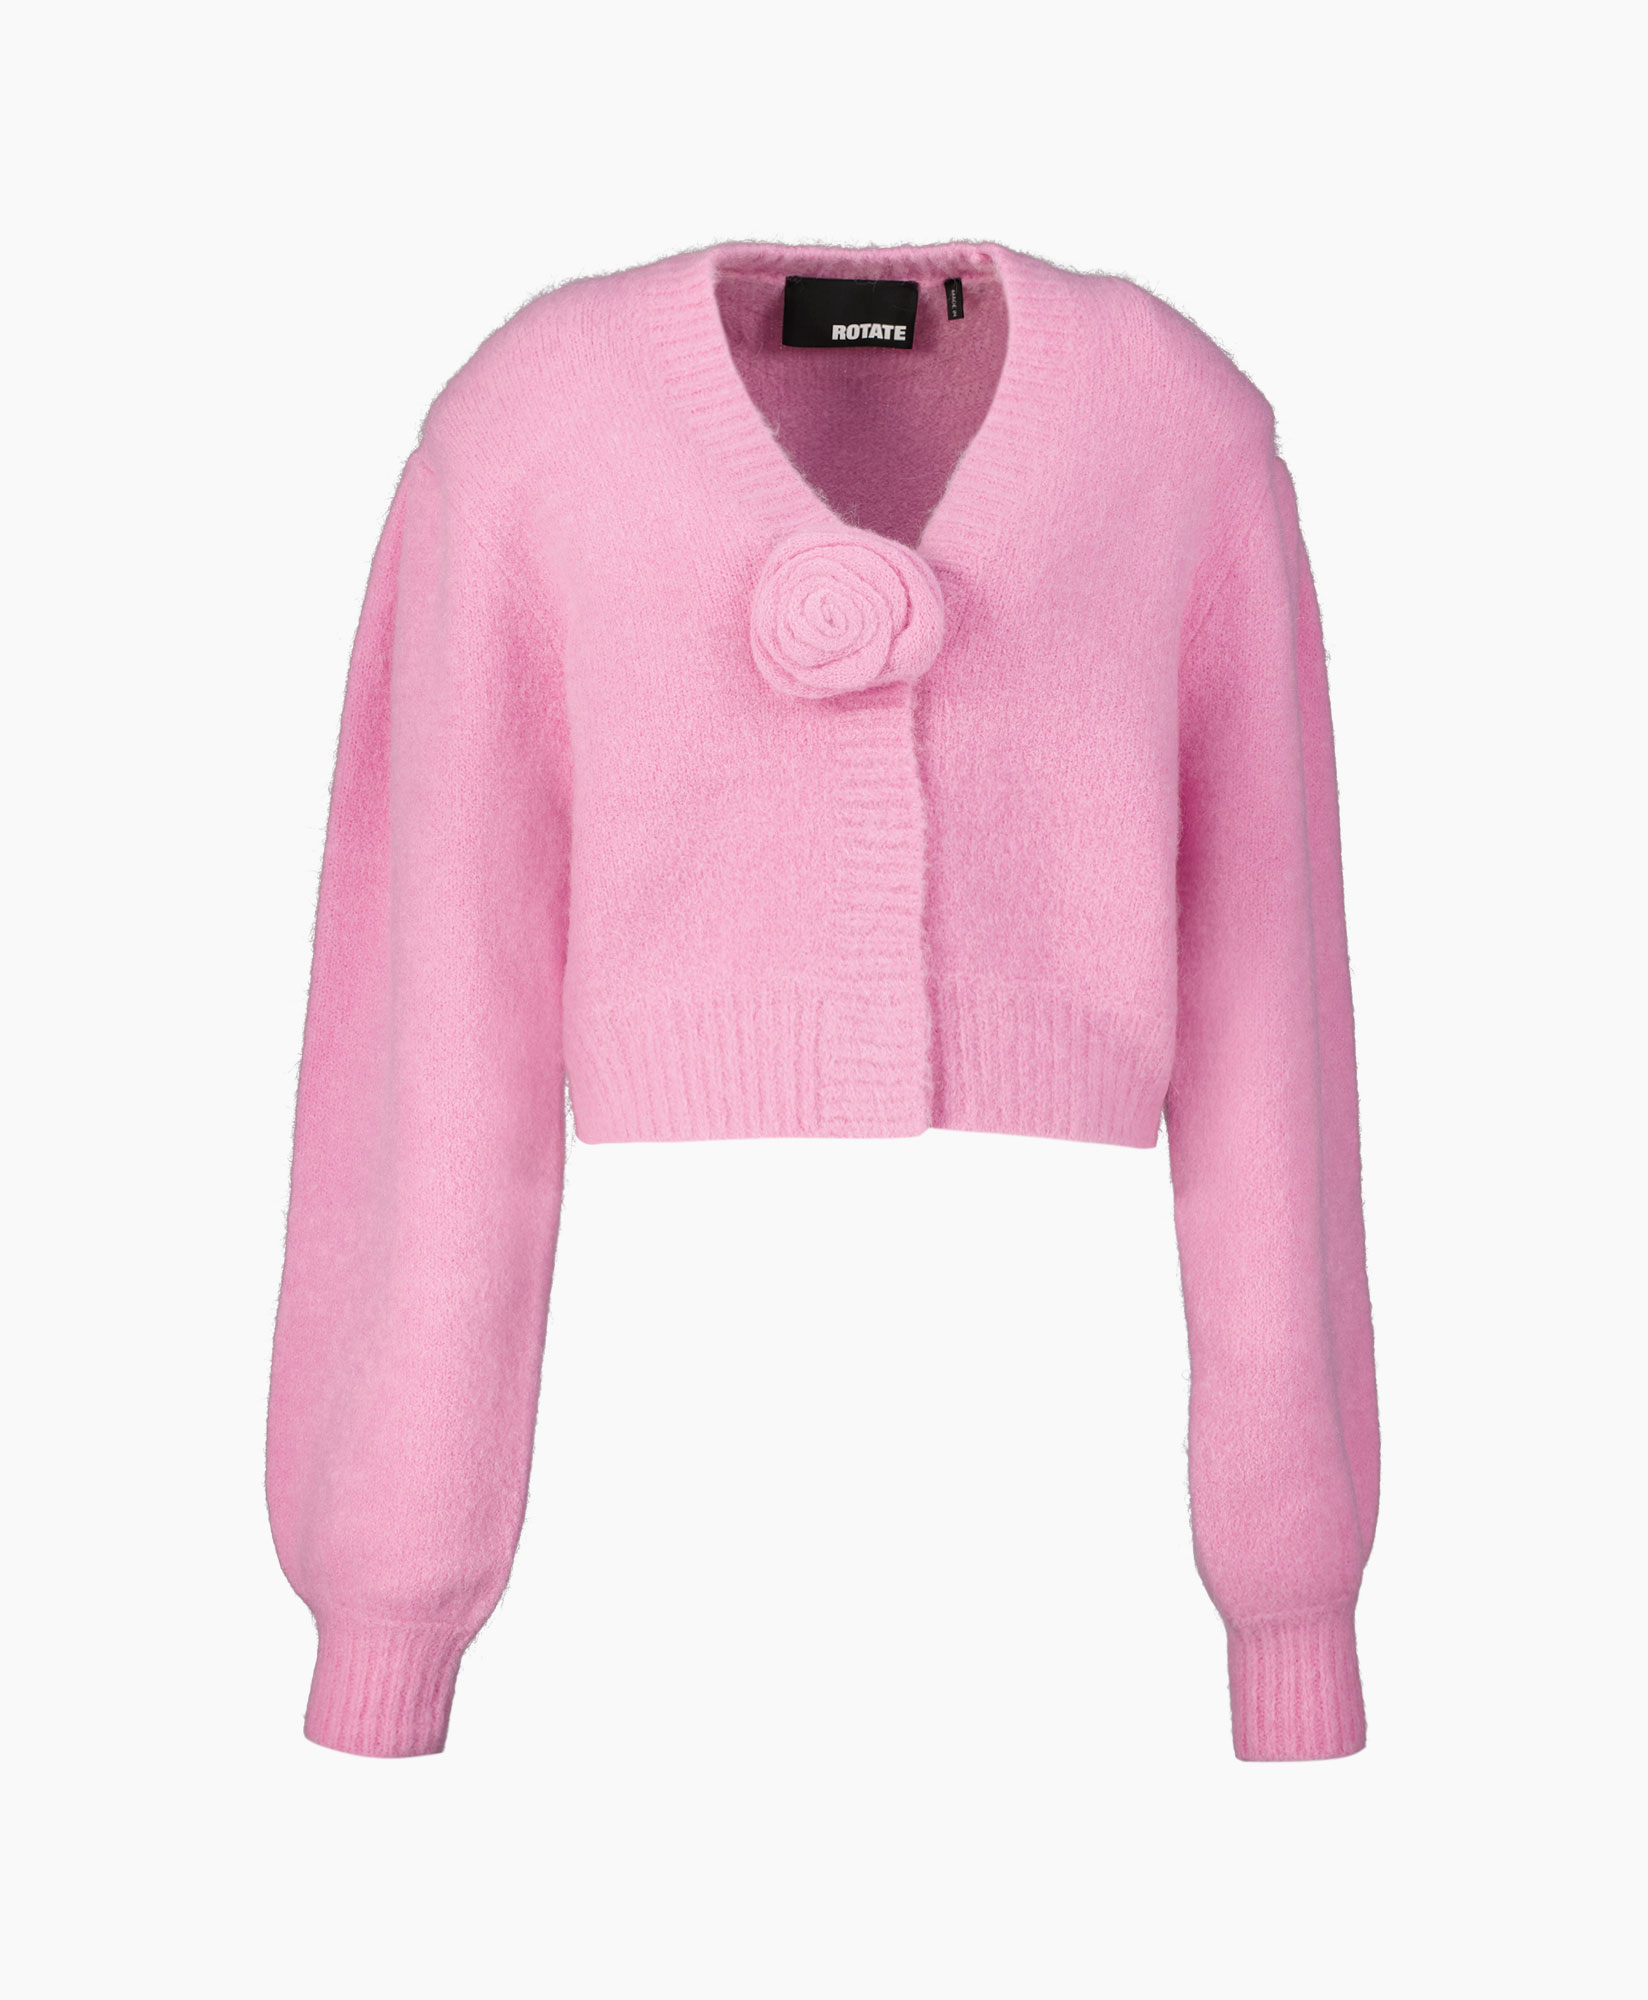 Vest Knit Cropped Pink